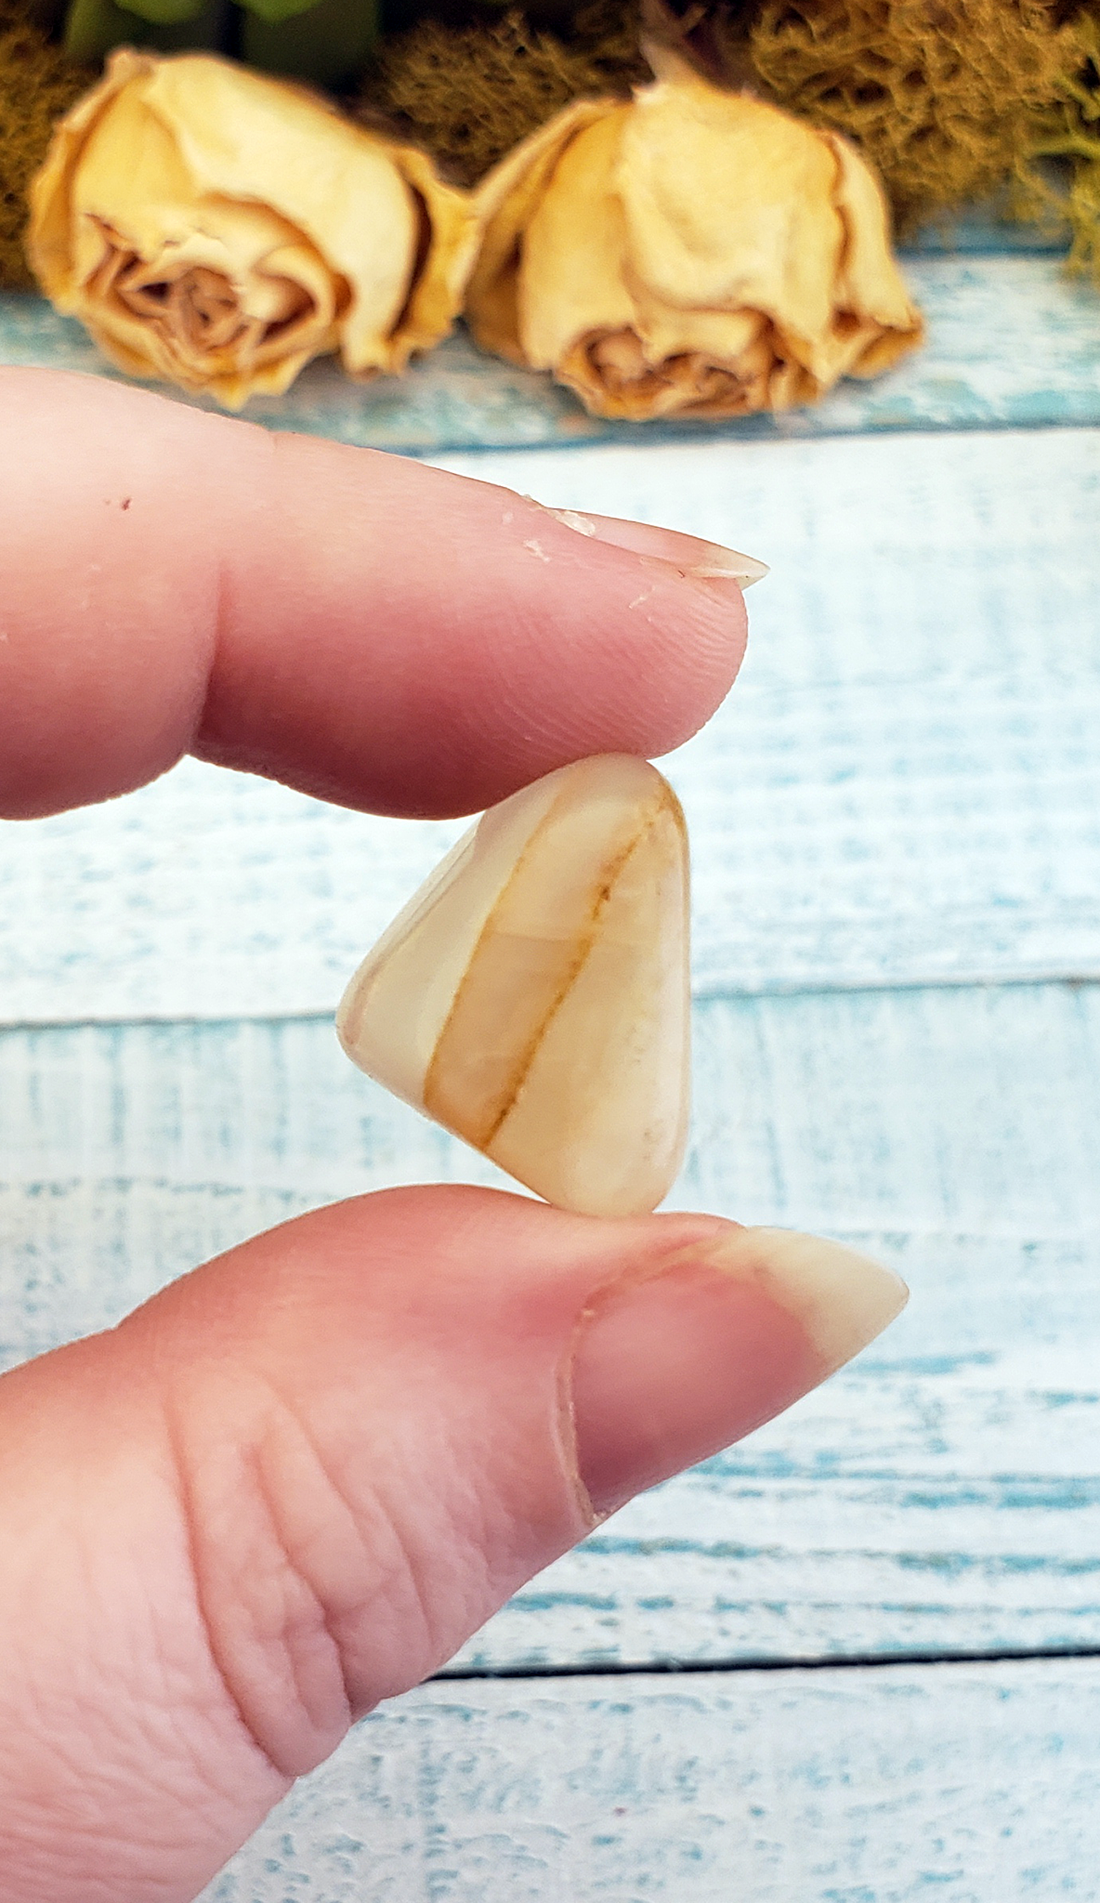 Multi-Moonstone Tumbled Gemstone - Freeform One Stone in Hand